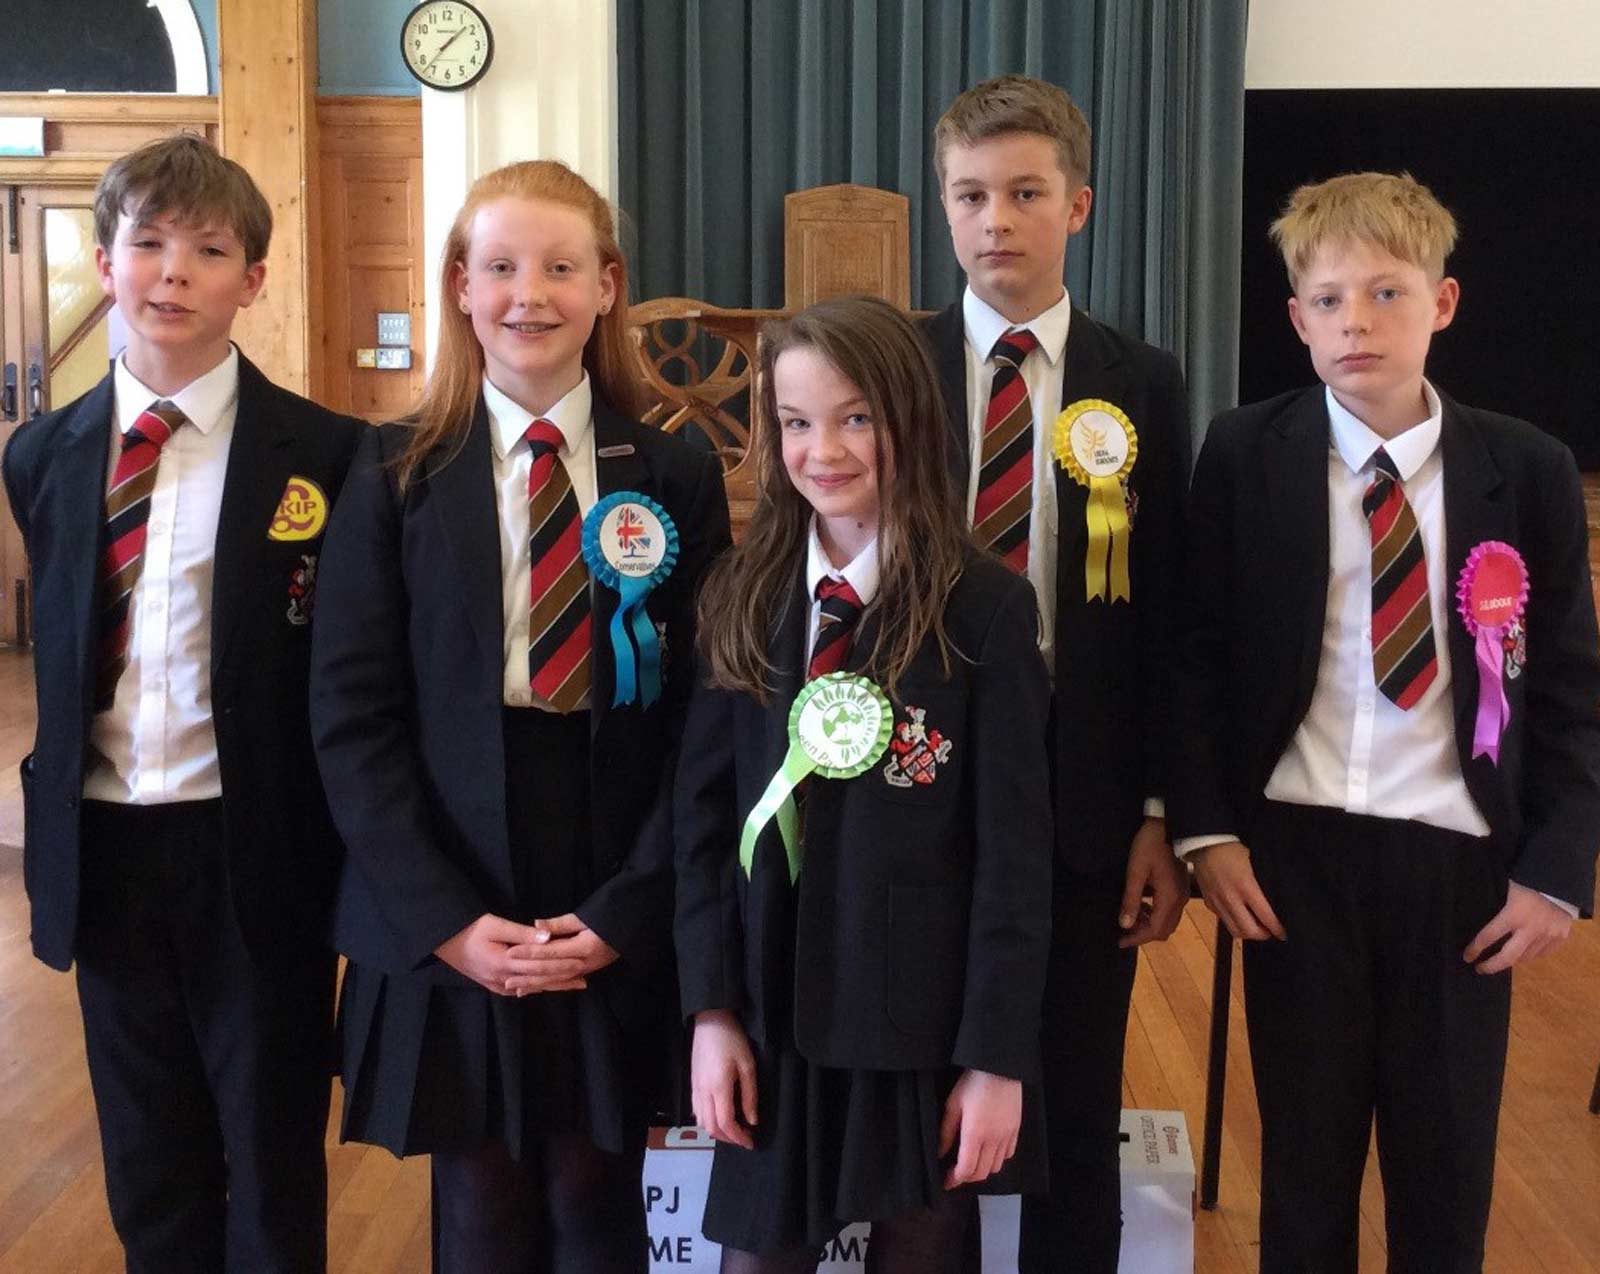 Political party candidates (L-R) Reuben Aston, Stephanie Lewis, Scarlett McIlwraith, Tom Owen and Oscar Dunn.